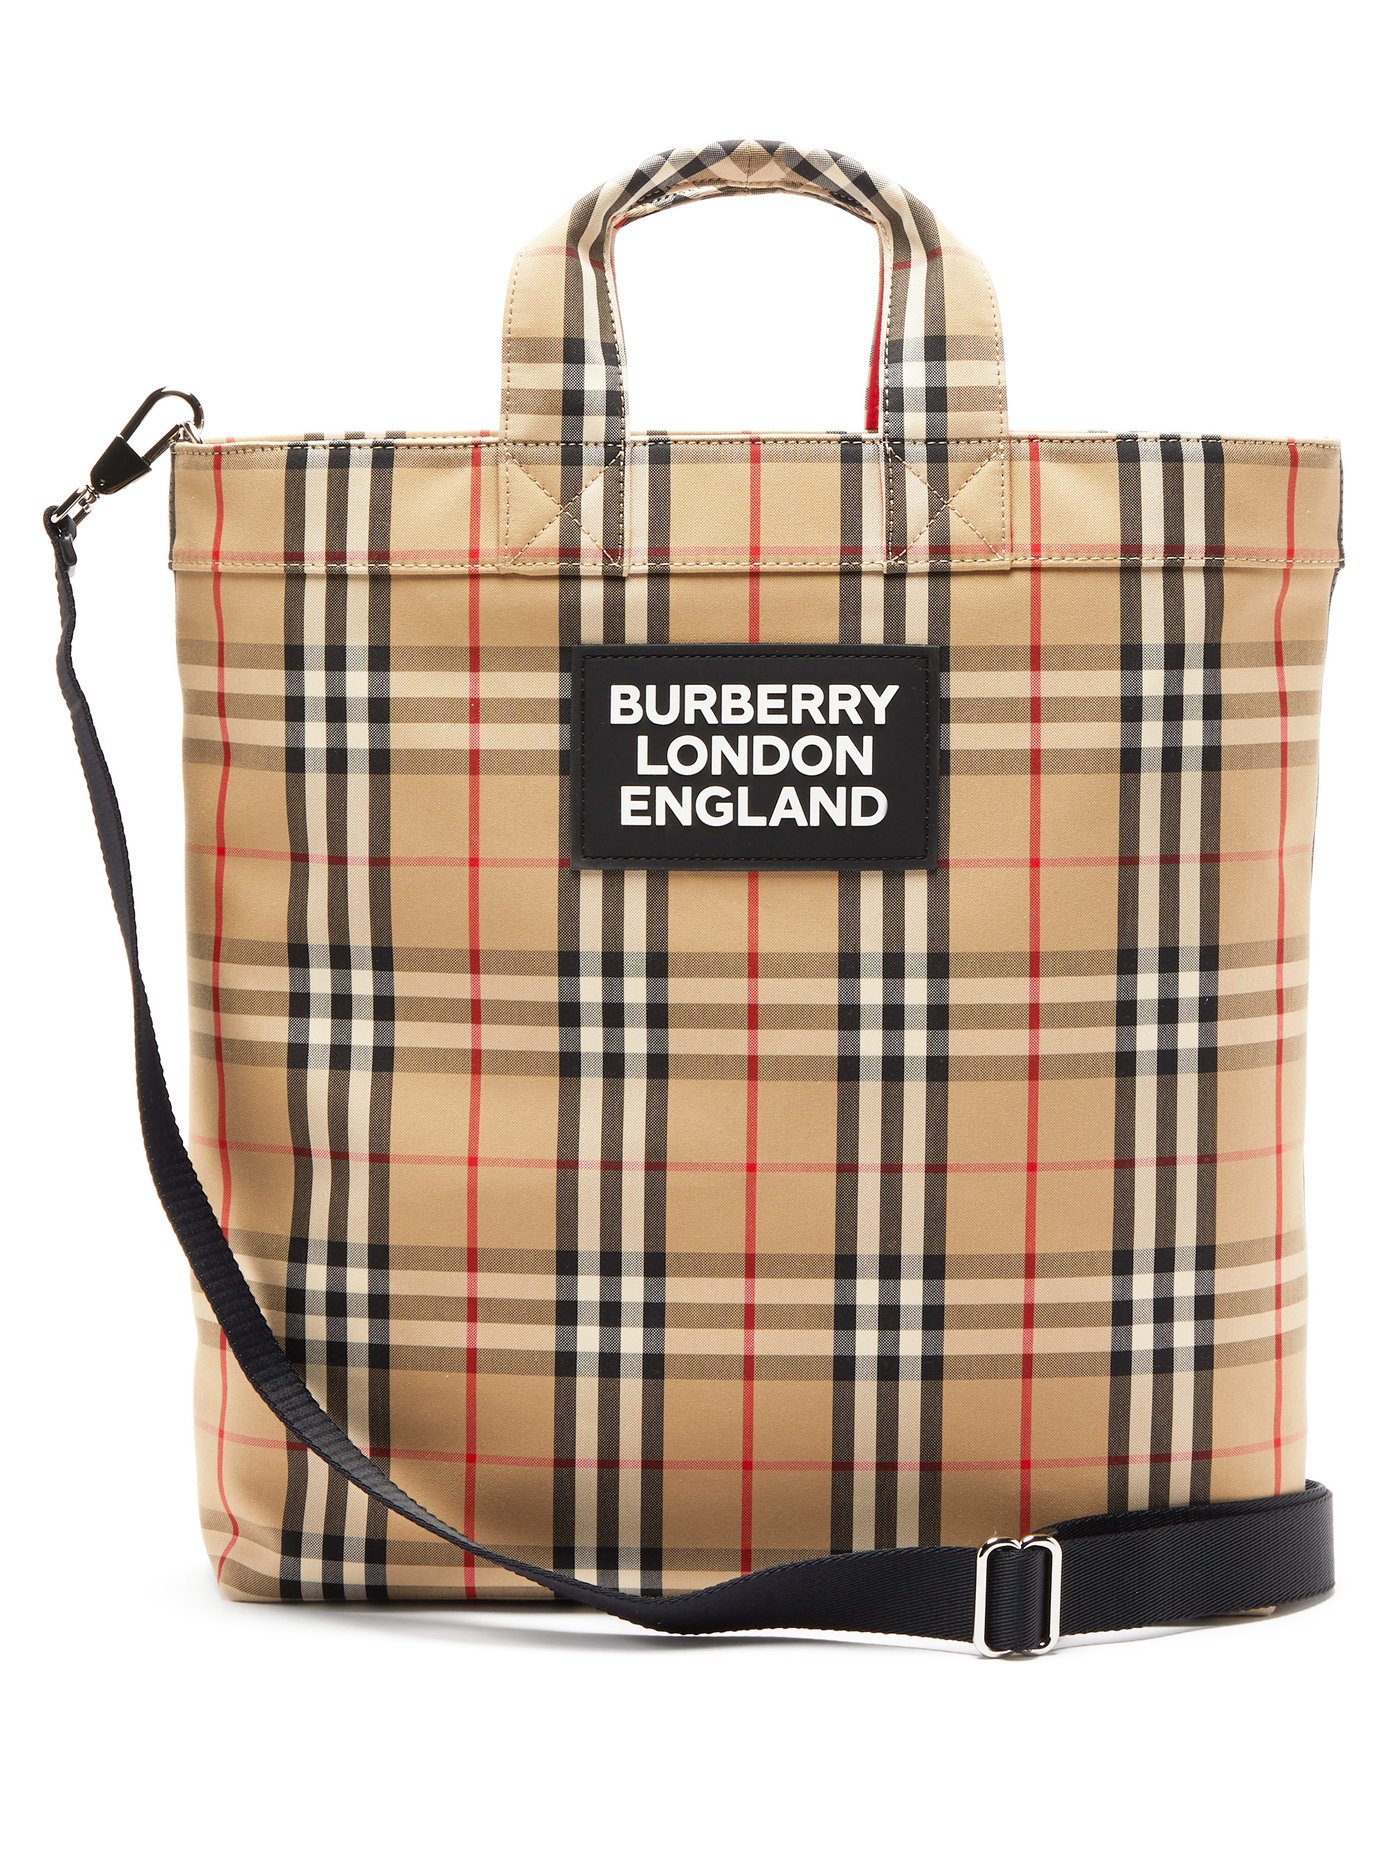 burberry london tote bag